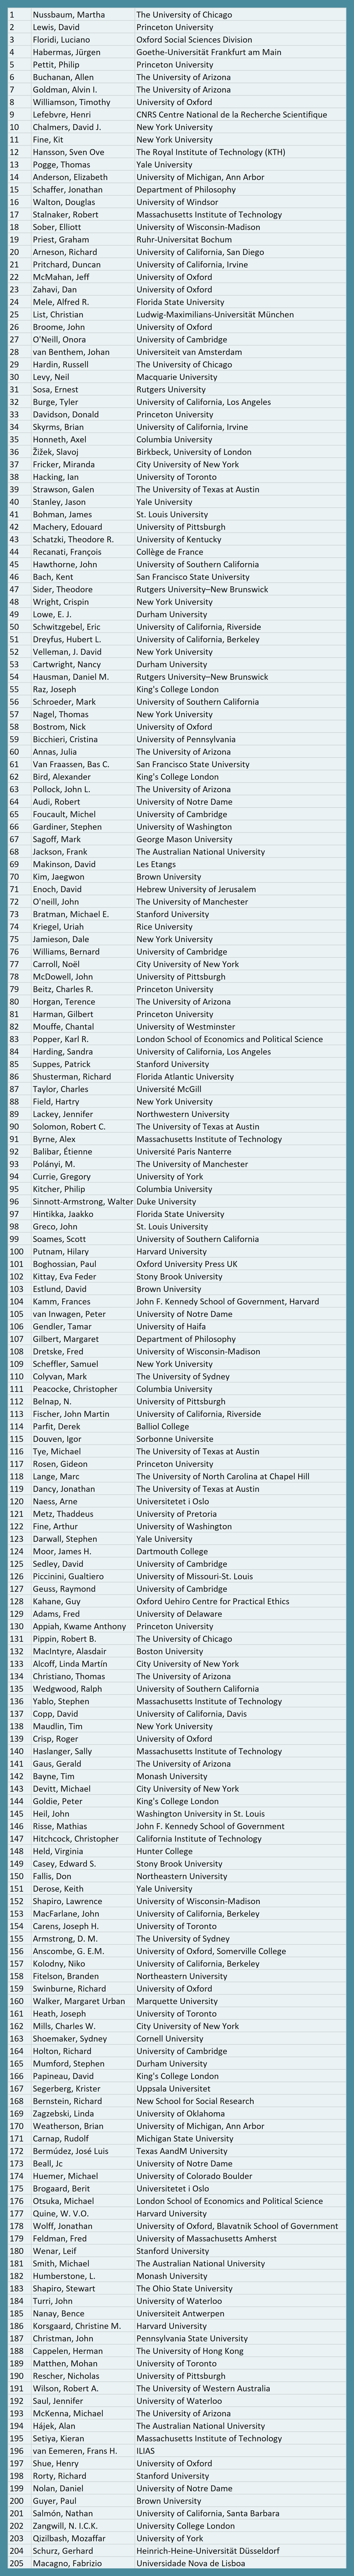 citation-rankings-of-philosophers-based-on-scopus-data-updated